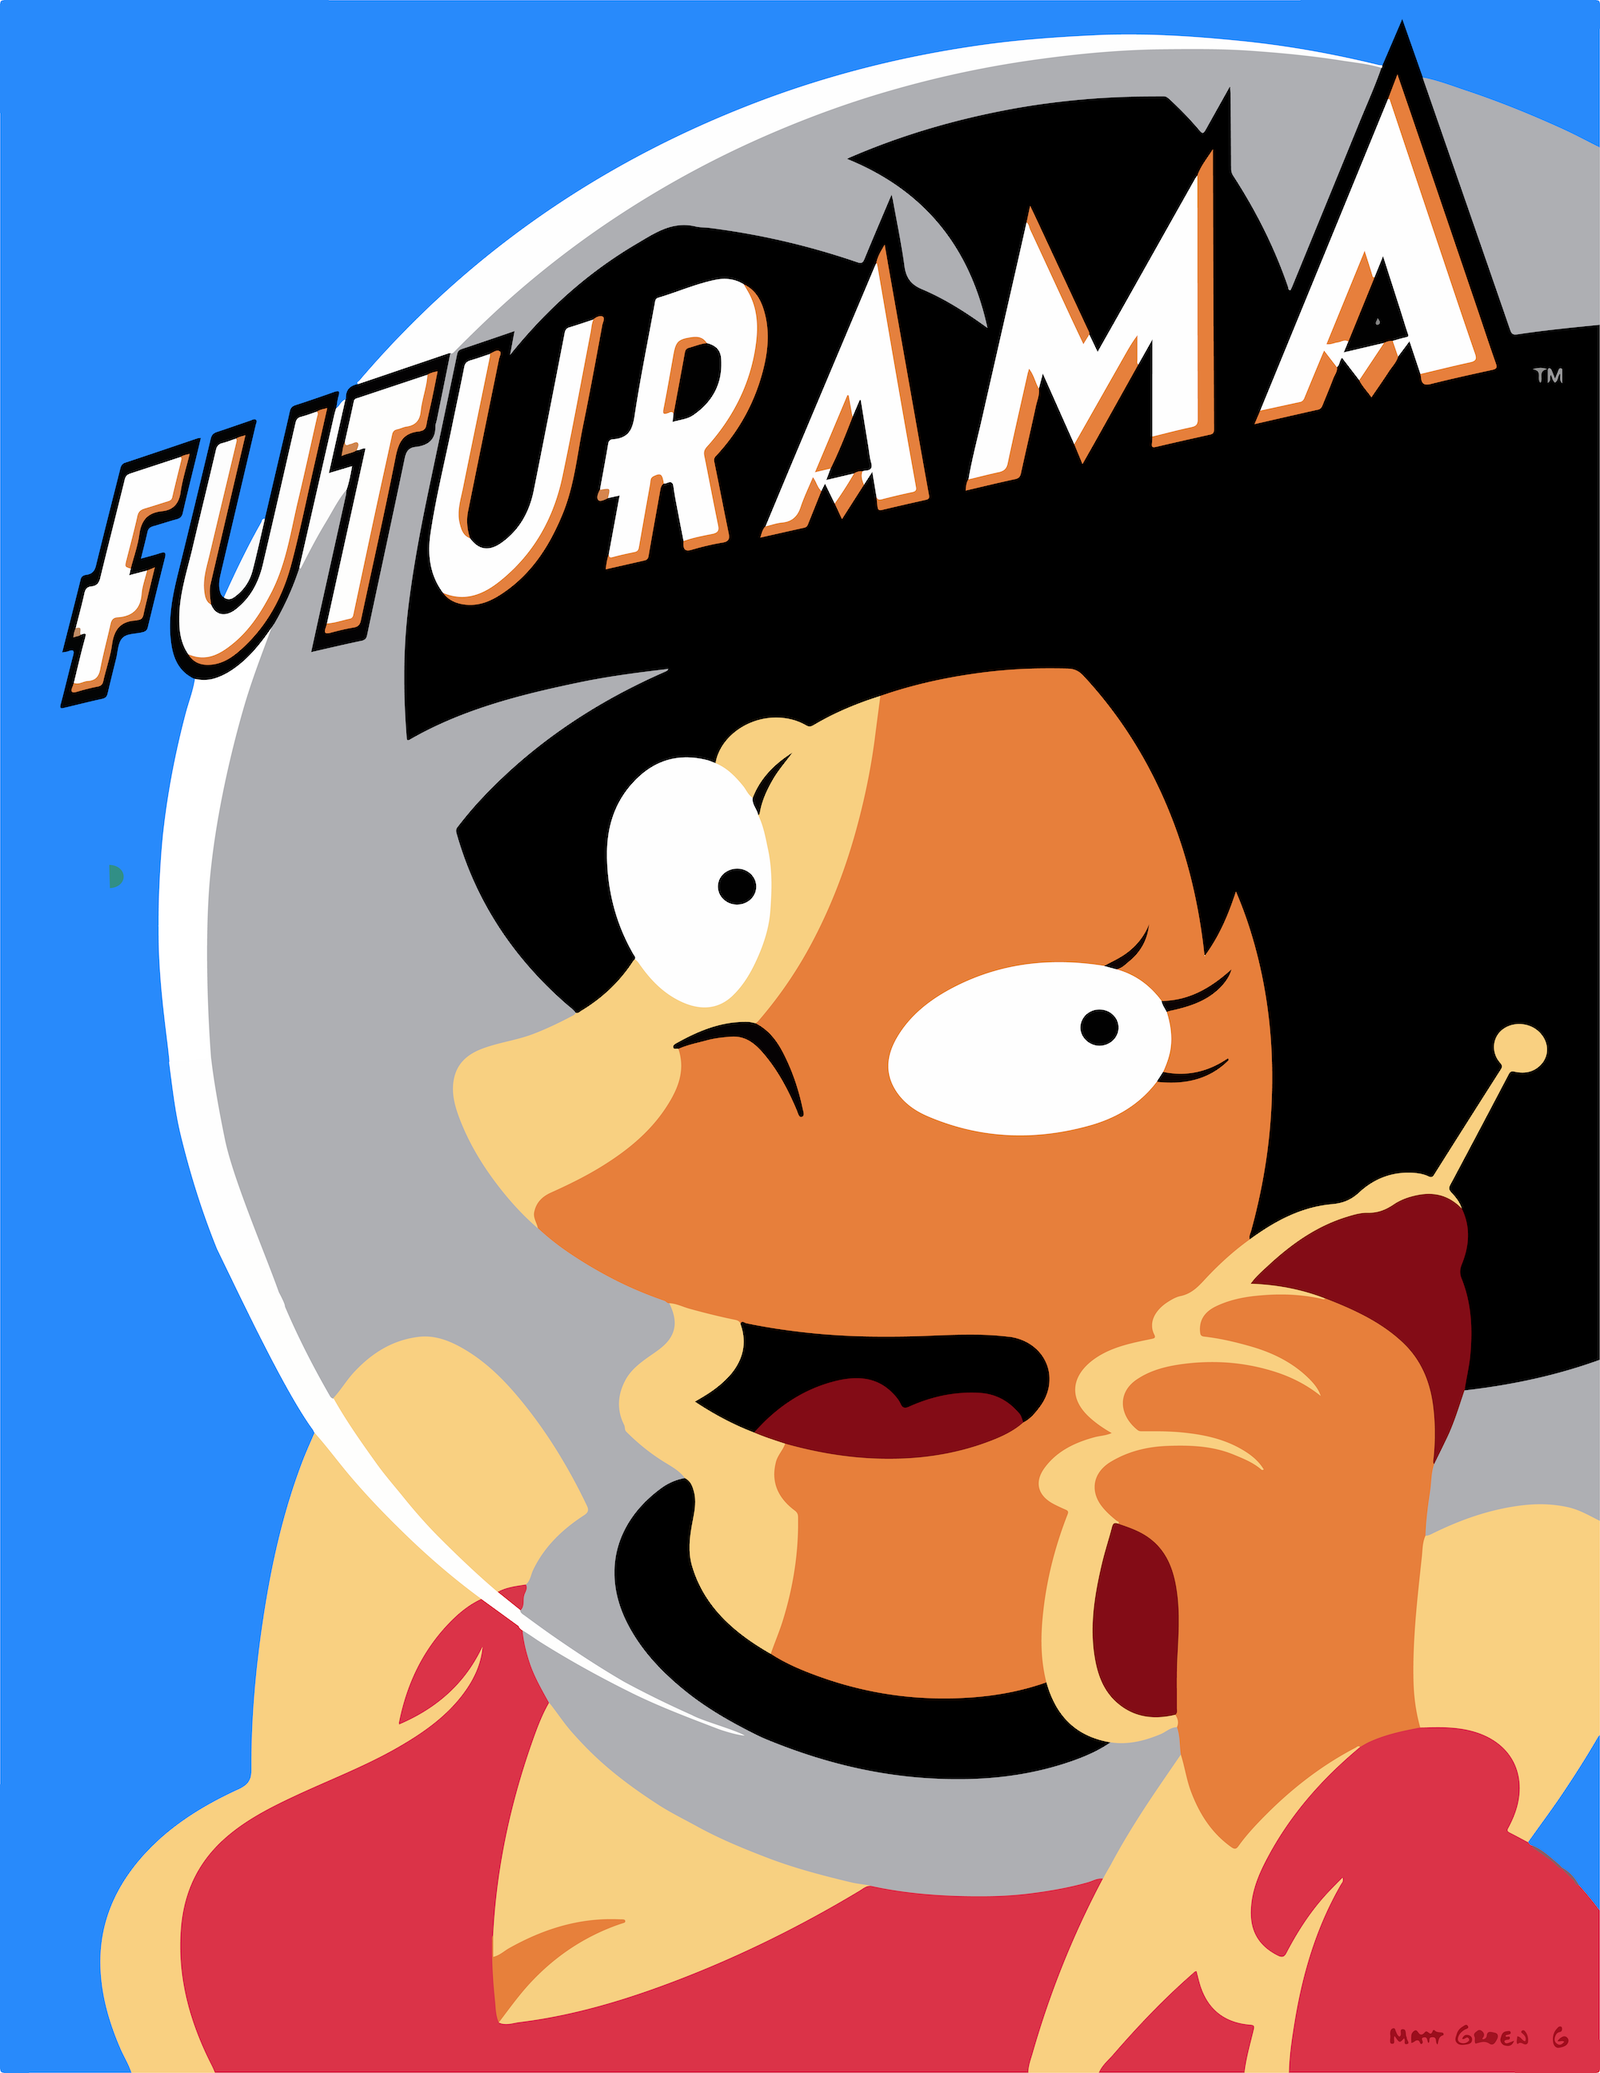 Futurama posters part 3.1 - Futurama, 2000s, 21 century, , Serials, Poster, Longpost